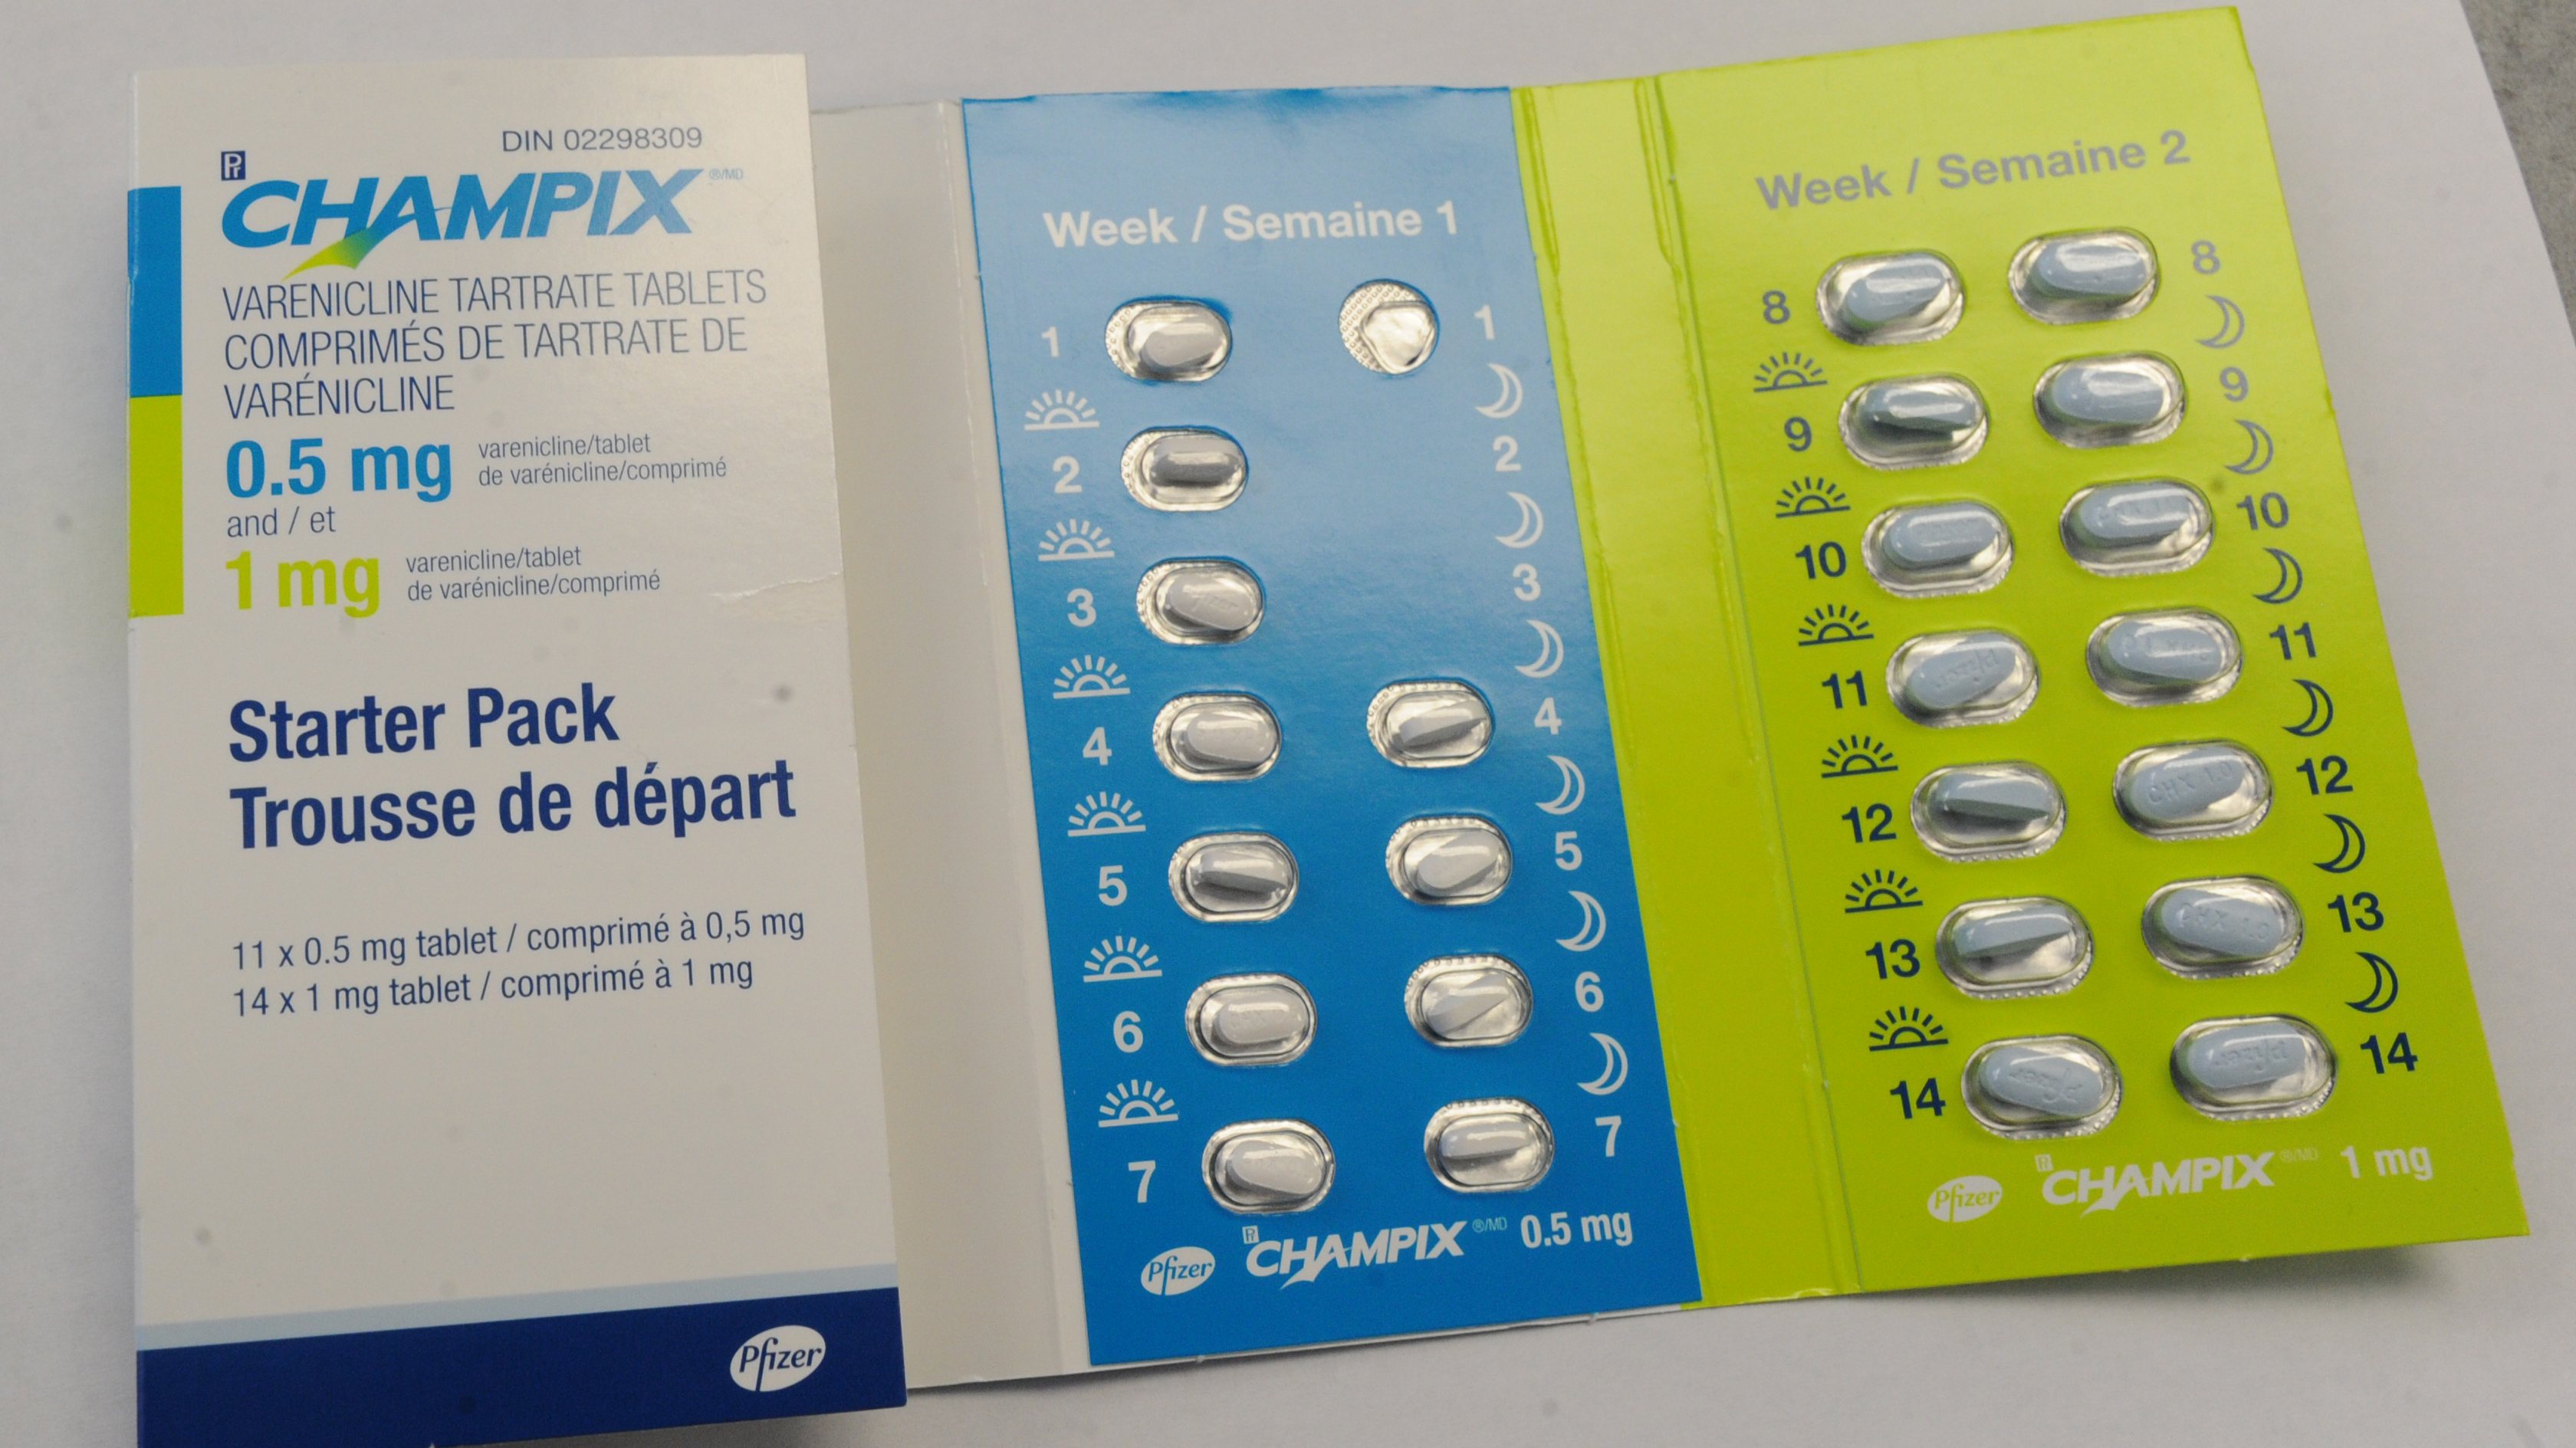 The prescription drug Champix sold locally in Toronto on Sep 24 2012